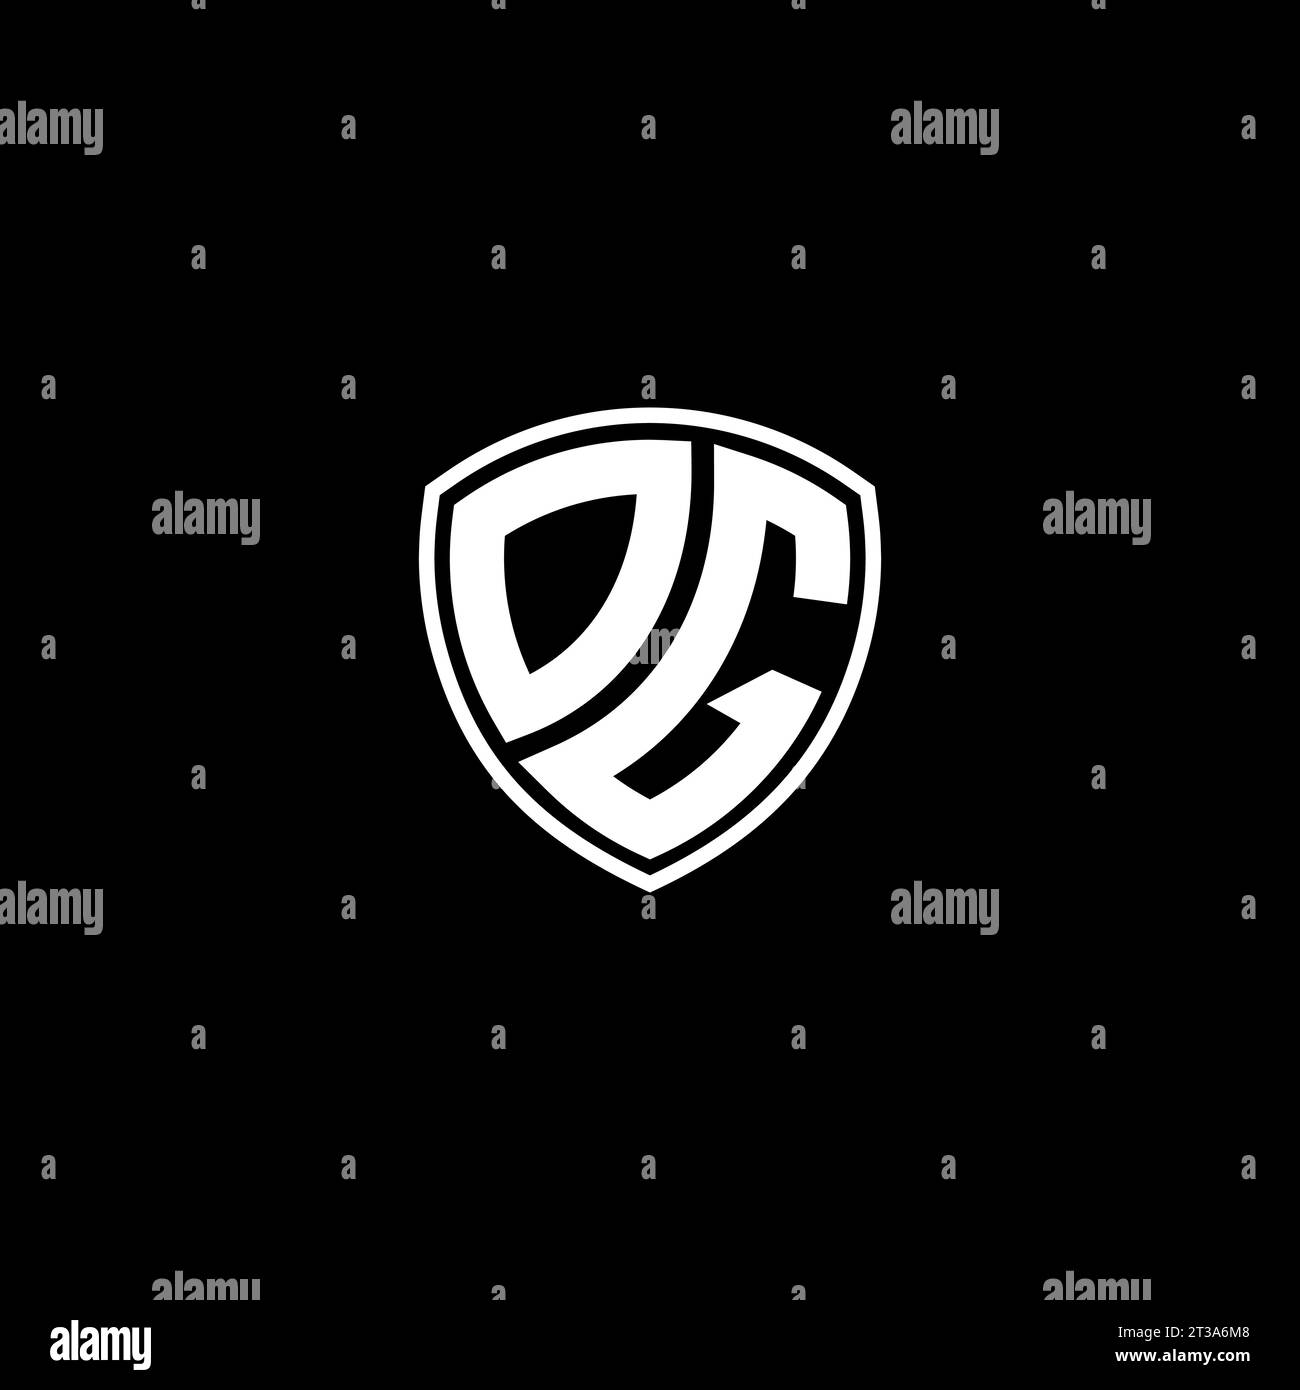 DG logo monogram emblem style with shield shape design template ideas Stock Vector